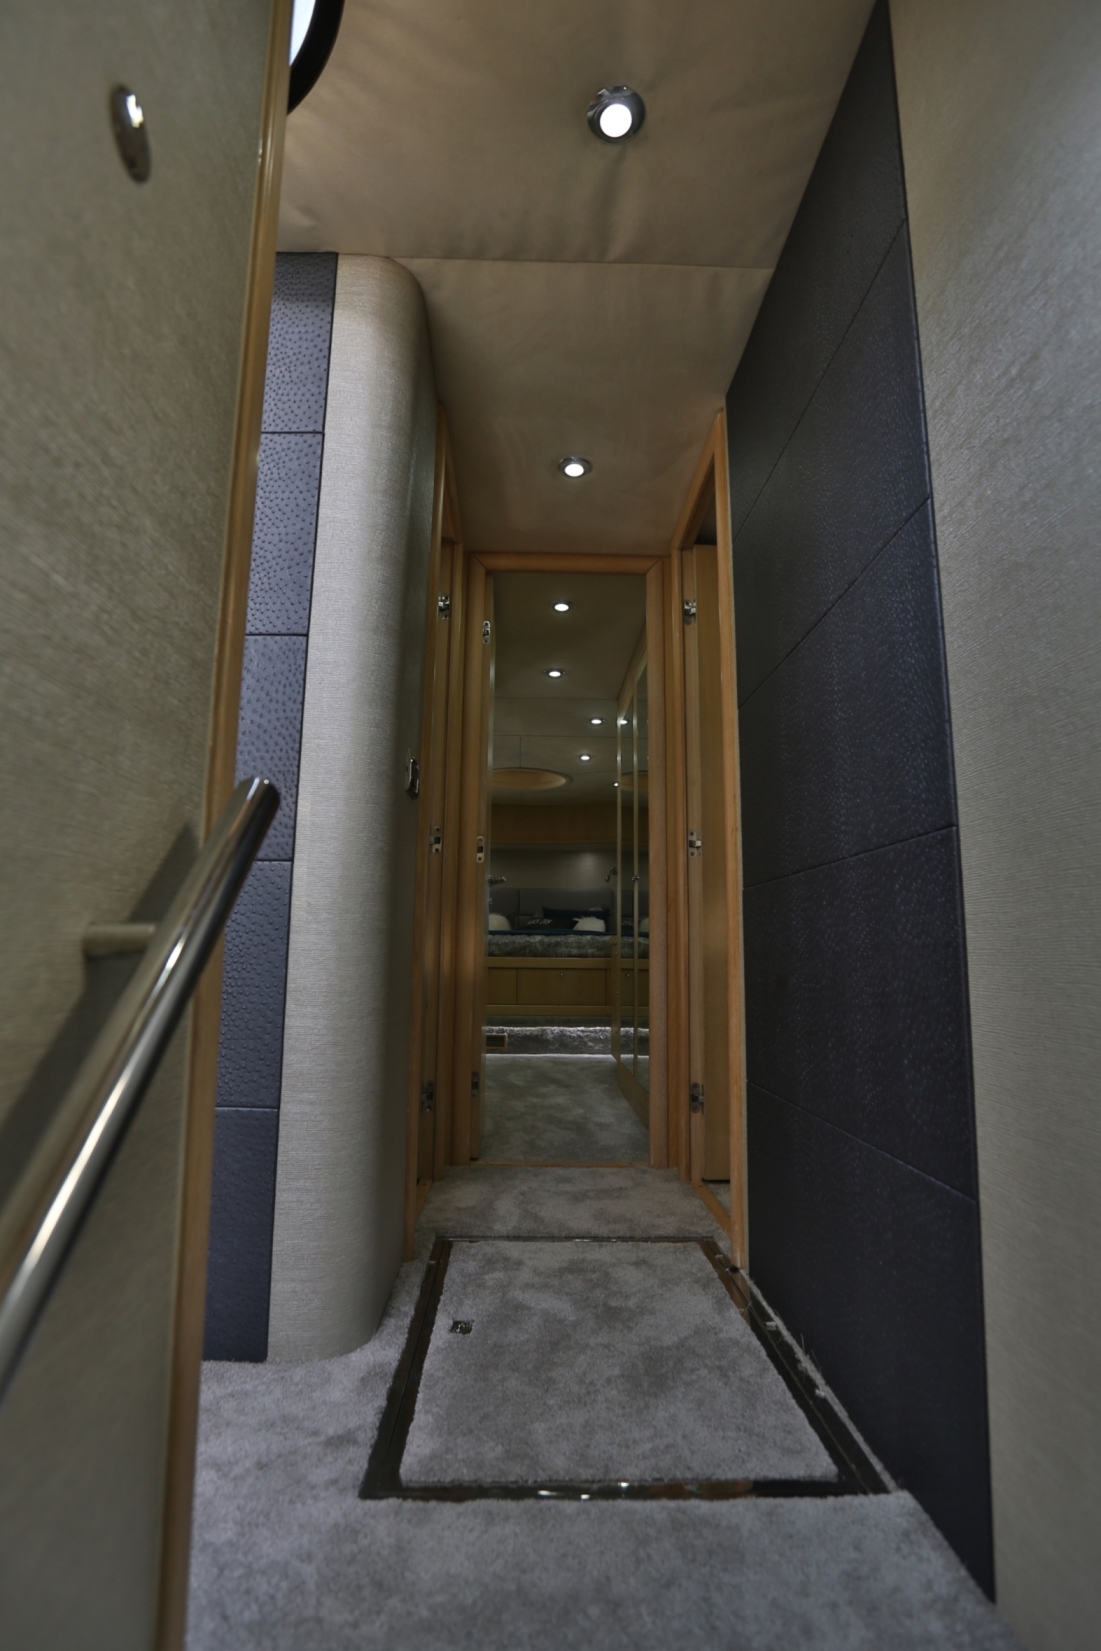 Corridor to guest cabins